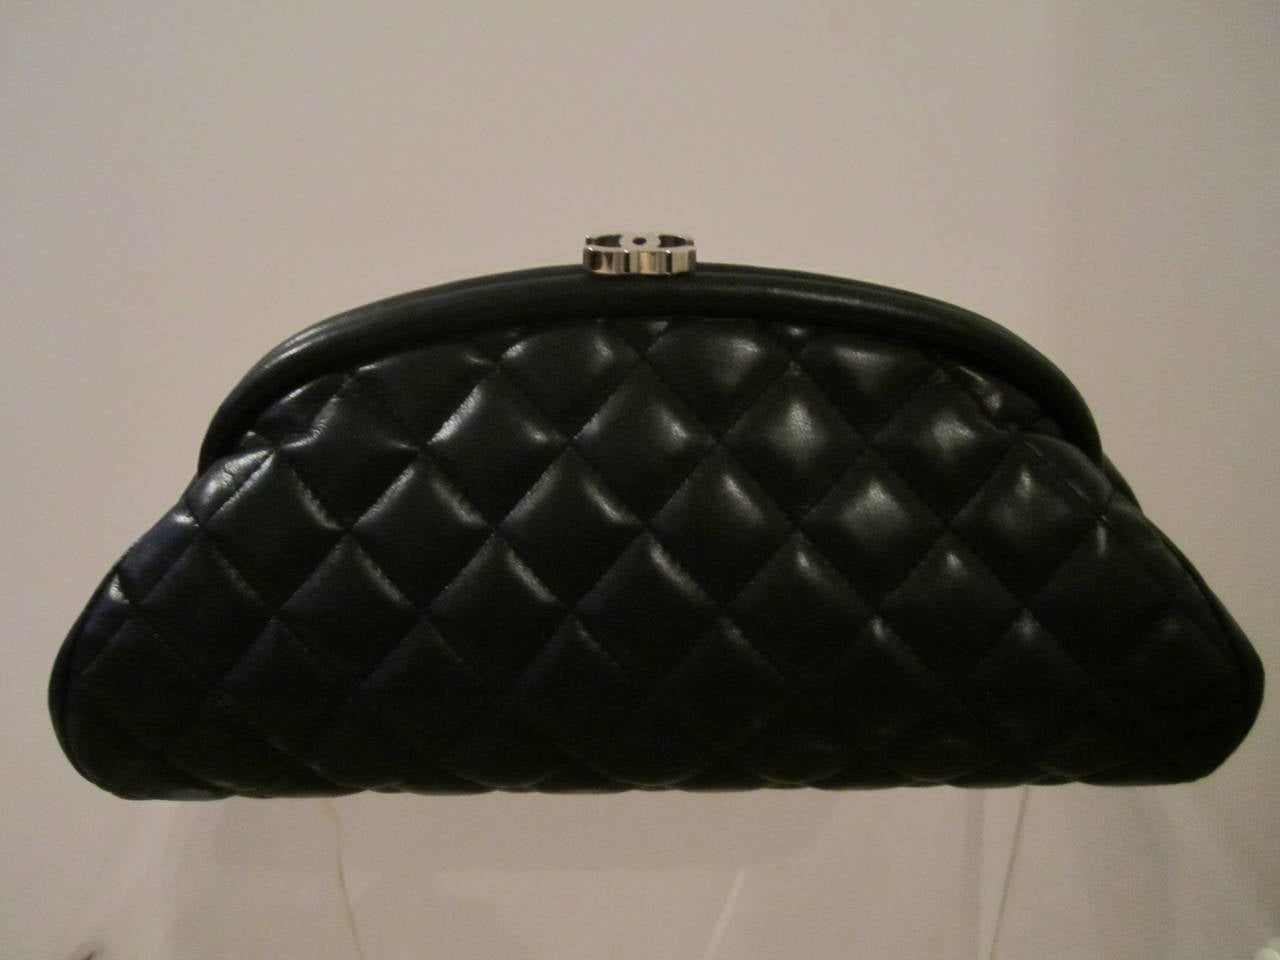 Authentic Chanel Black Leather Classic Clutch Handbag 4